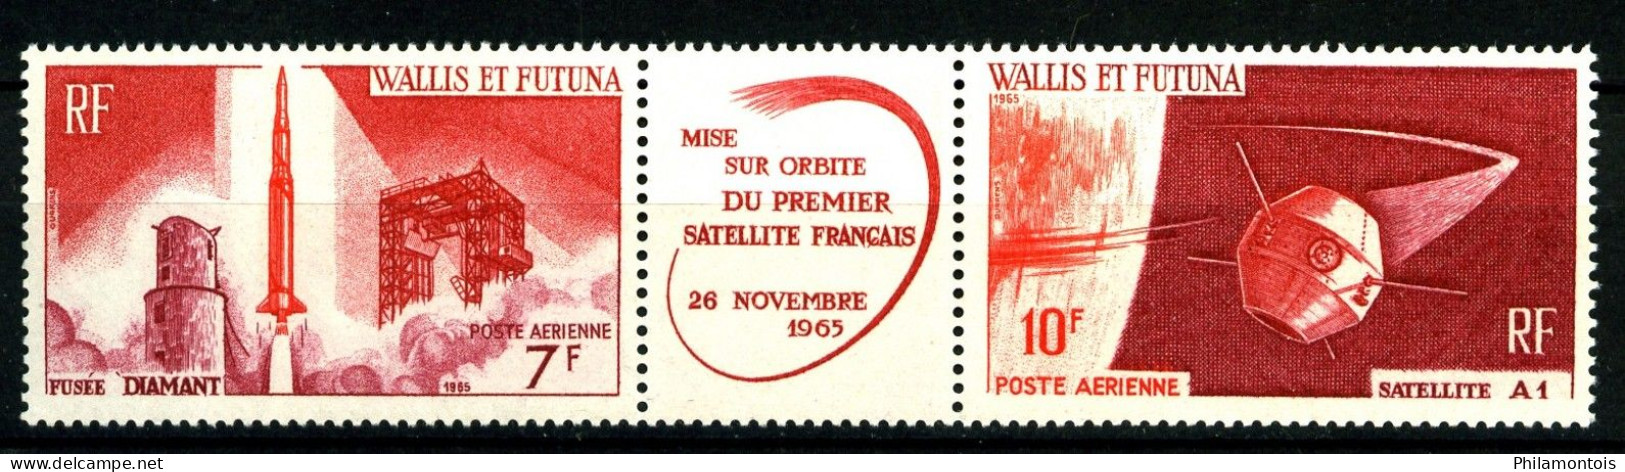 WALLIS - PA  25A - Triptyque Satellite A1 - Neuf N** - Très Beau - Unused Stamps